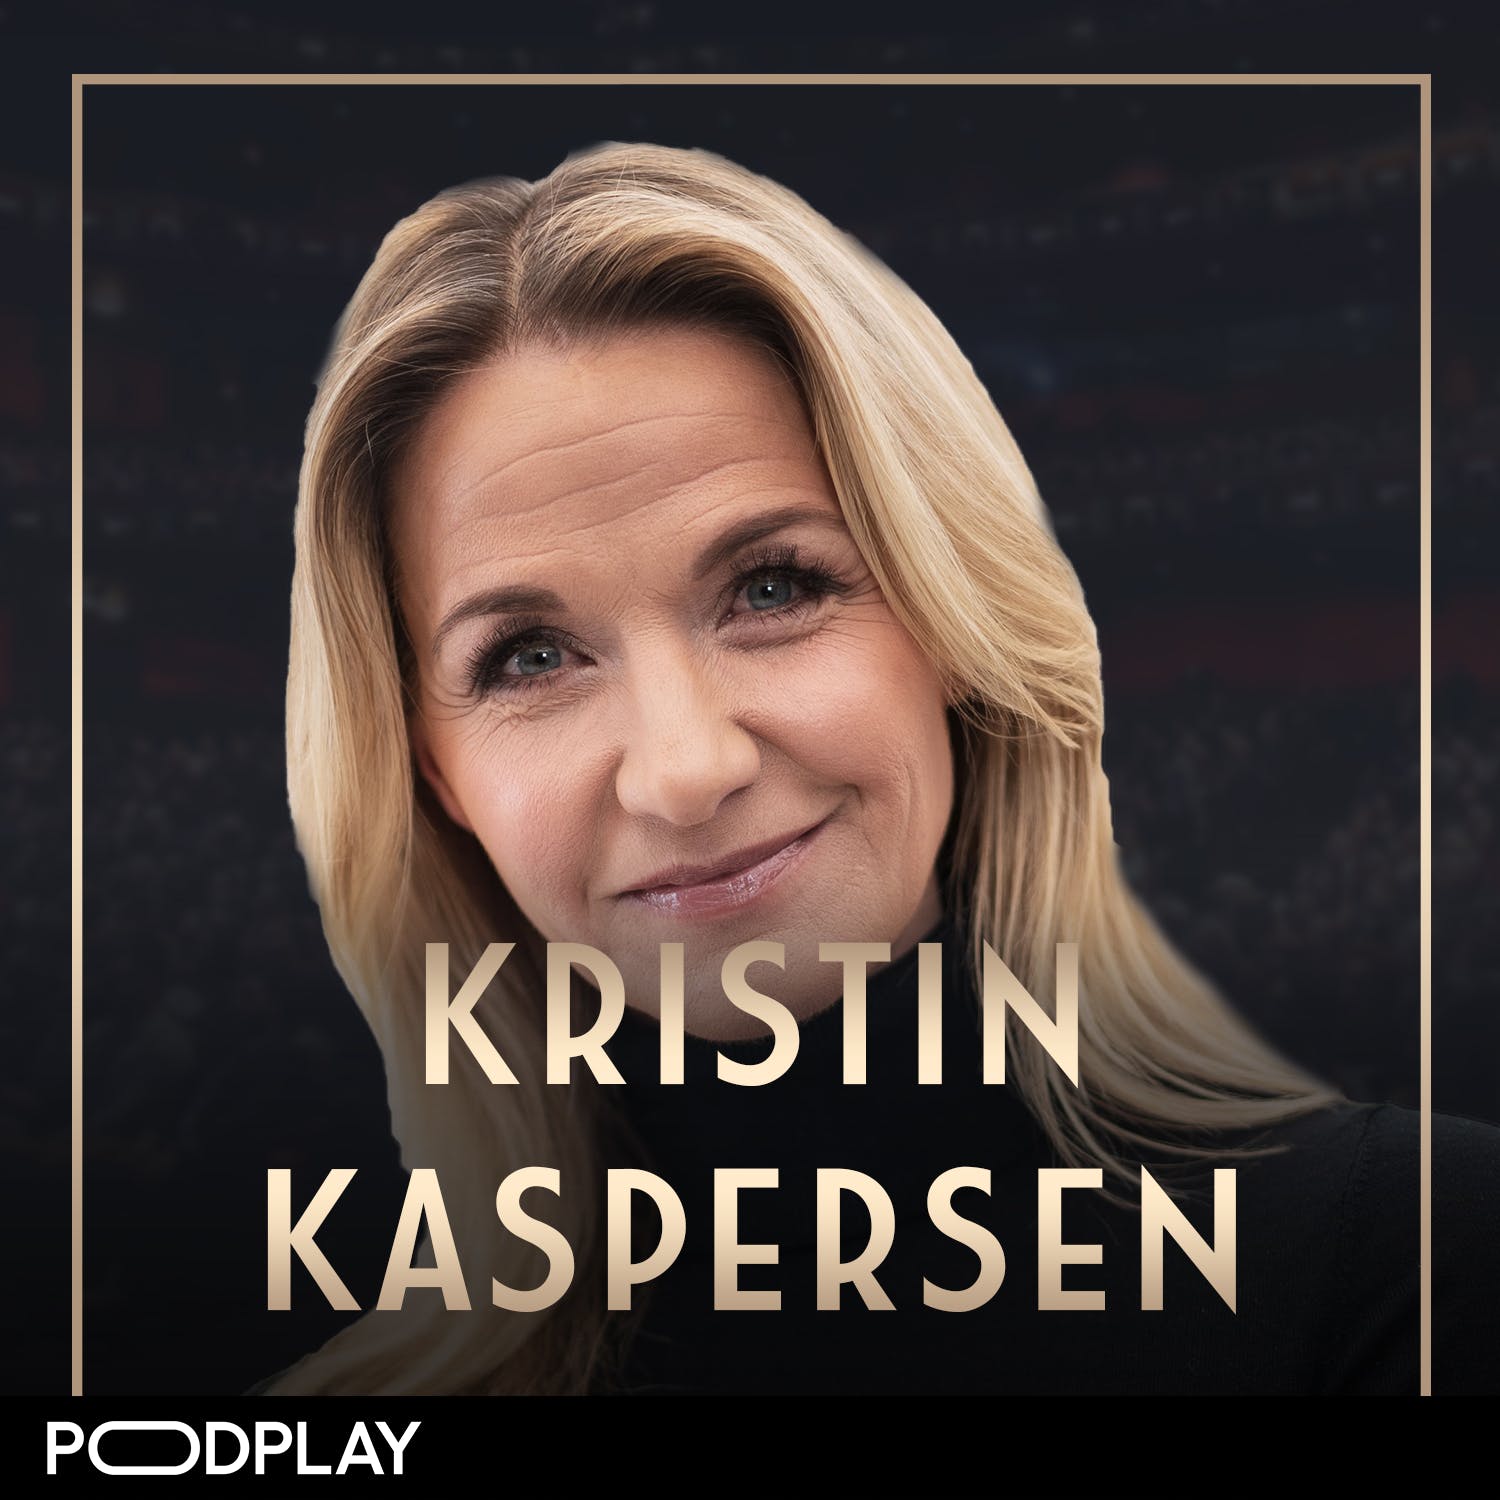 509. Kristin Kaspersen - Så minskar du din inre stress, Original